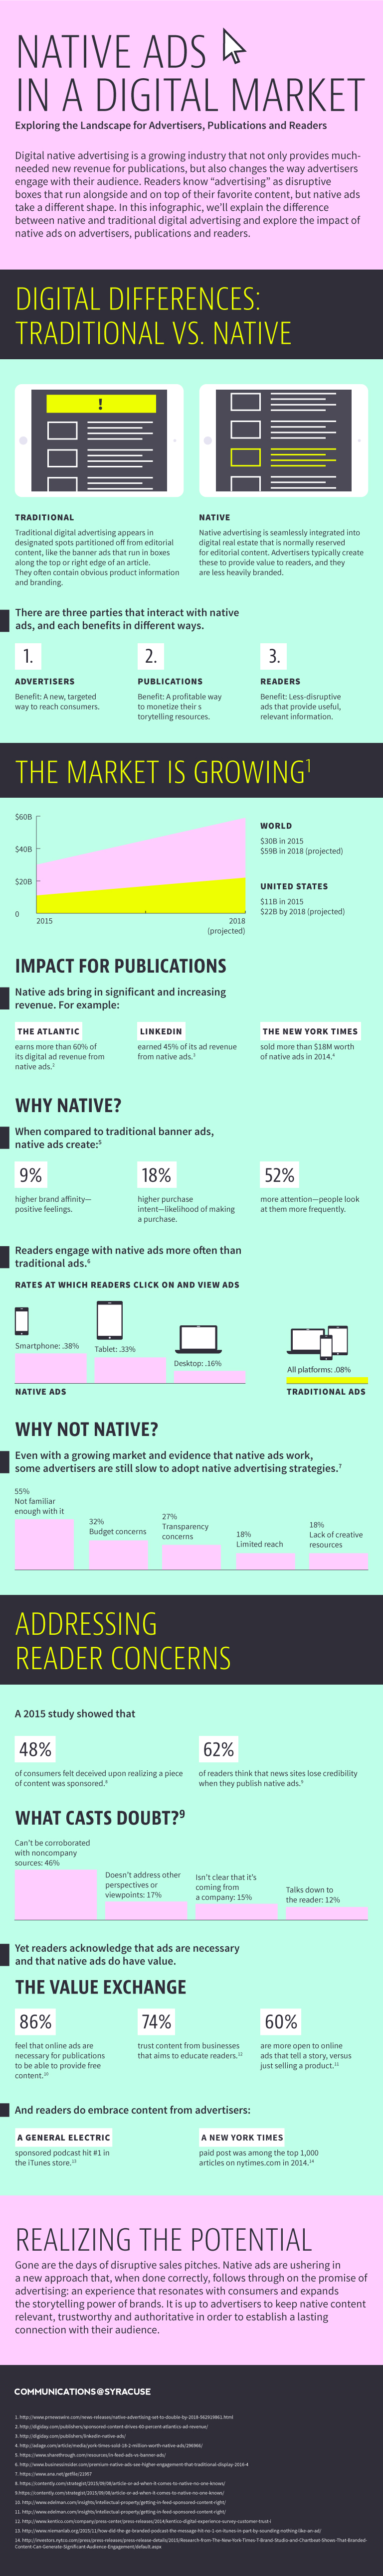 Infographic explaining native advertising.